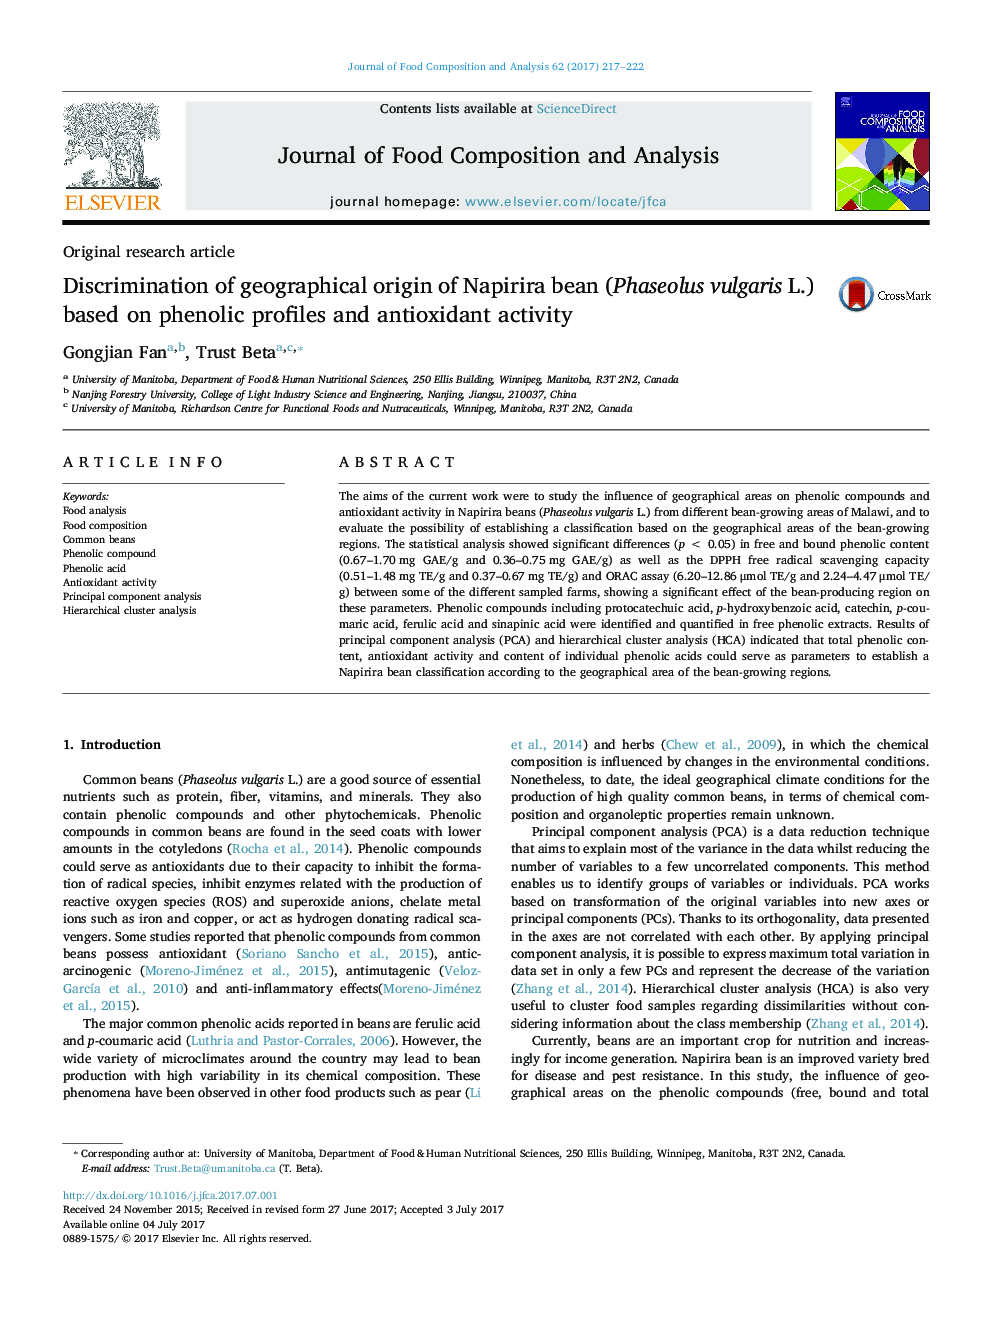 Original research articleDiscrimination of geographical origin of Napirira bean (Phaseolus vulgaris L.) based on phenolic profiles and antioxidant activity